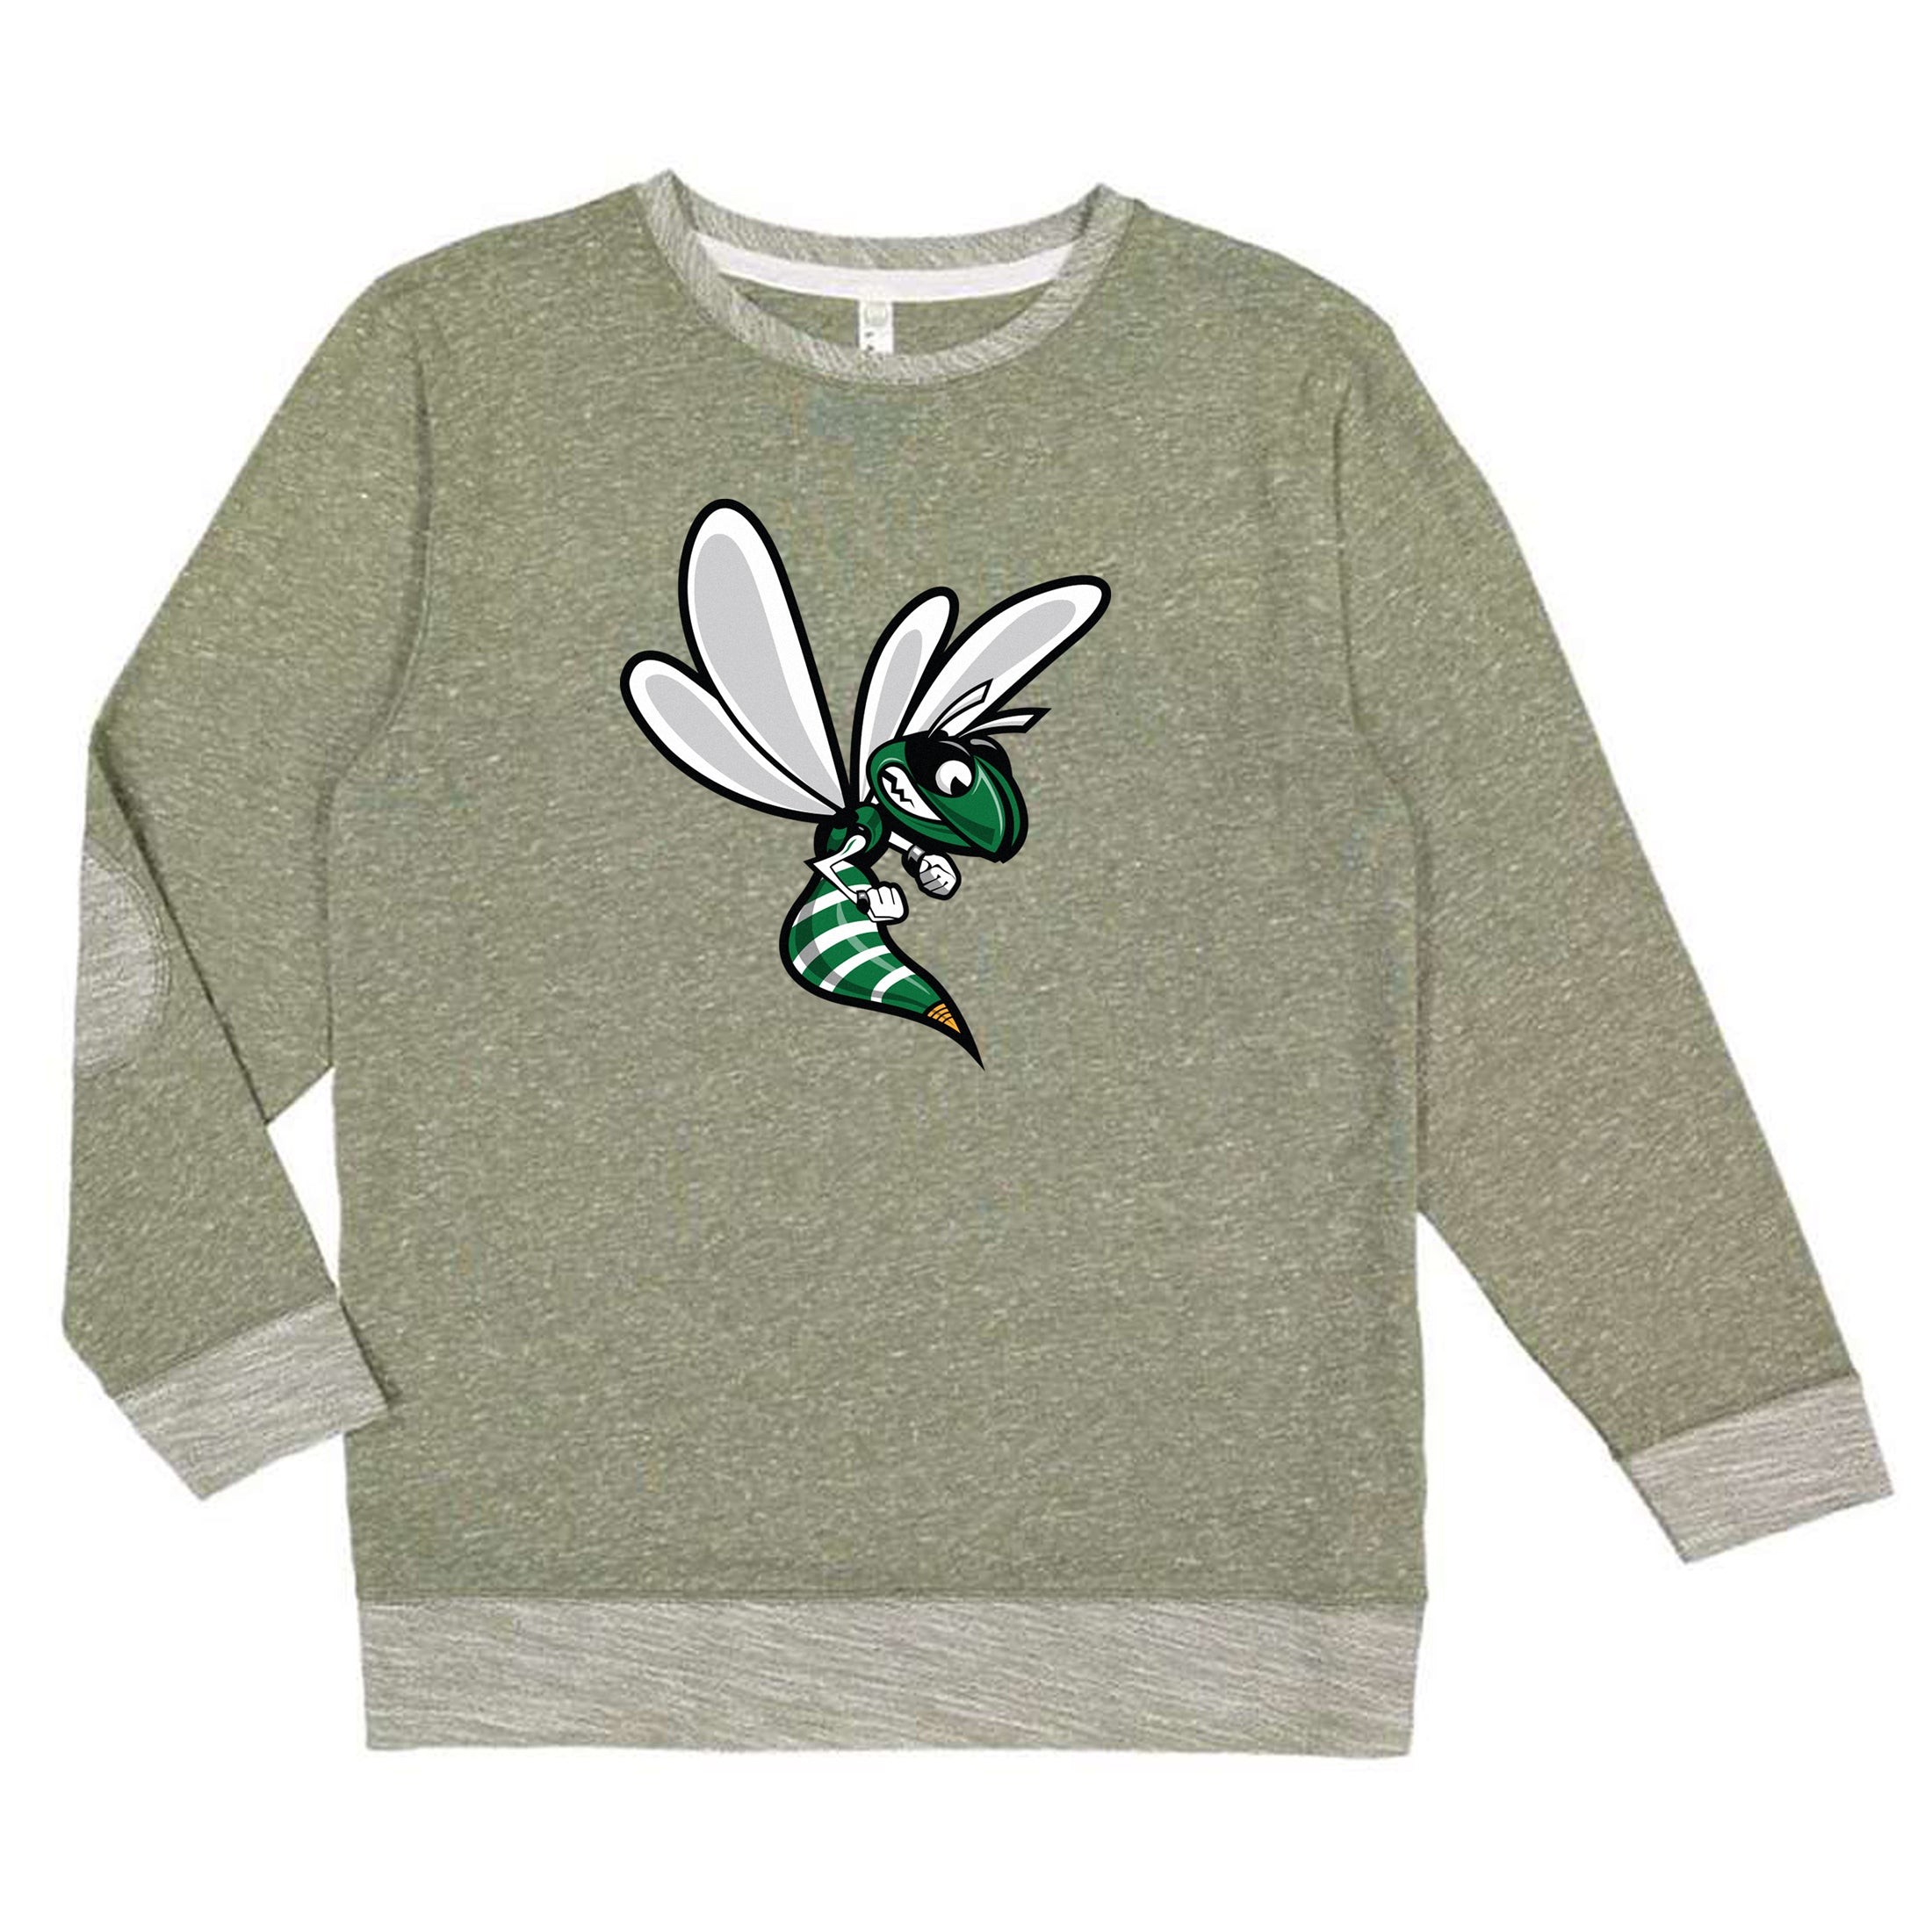 Hornet - Melange - Adult Sweater